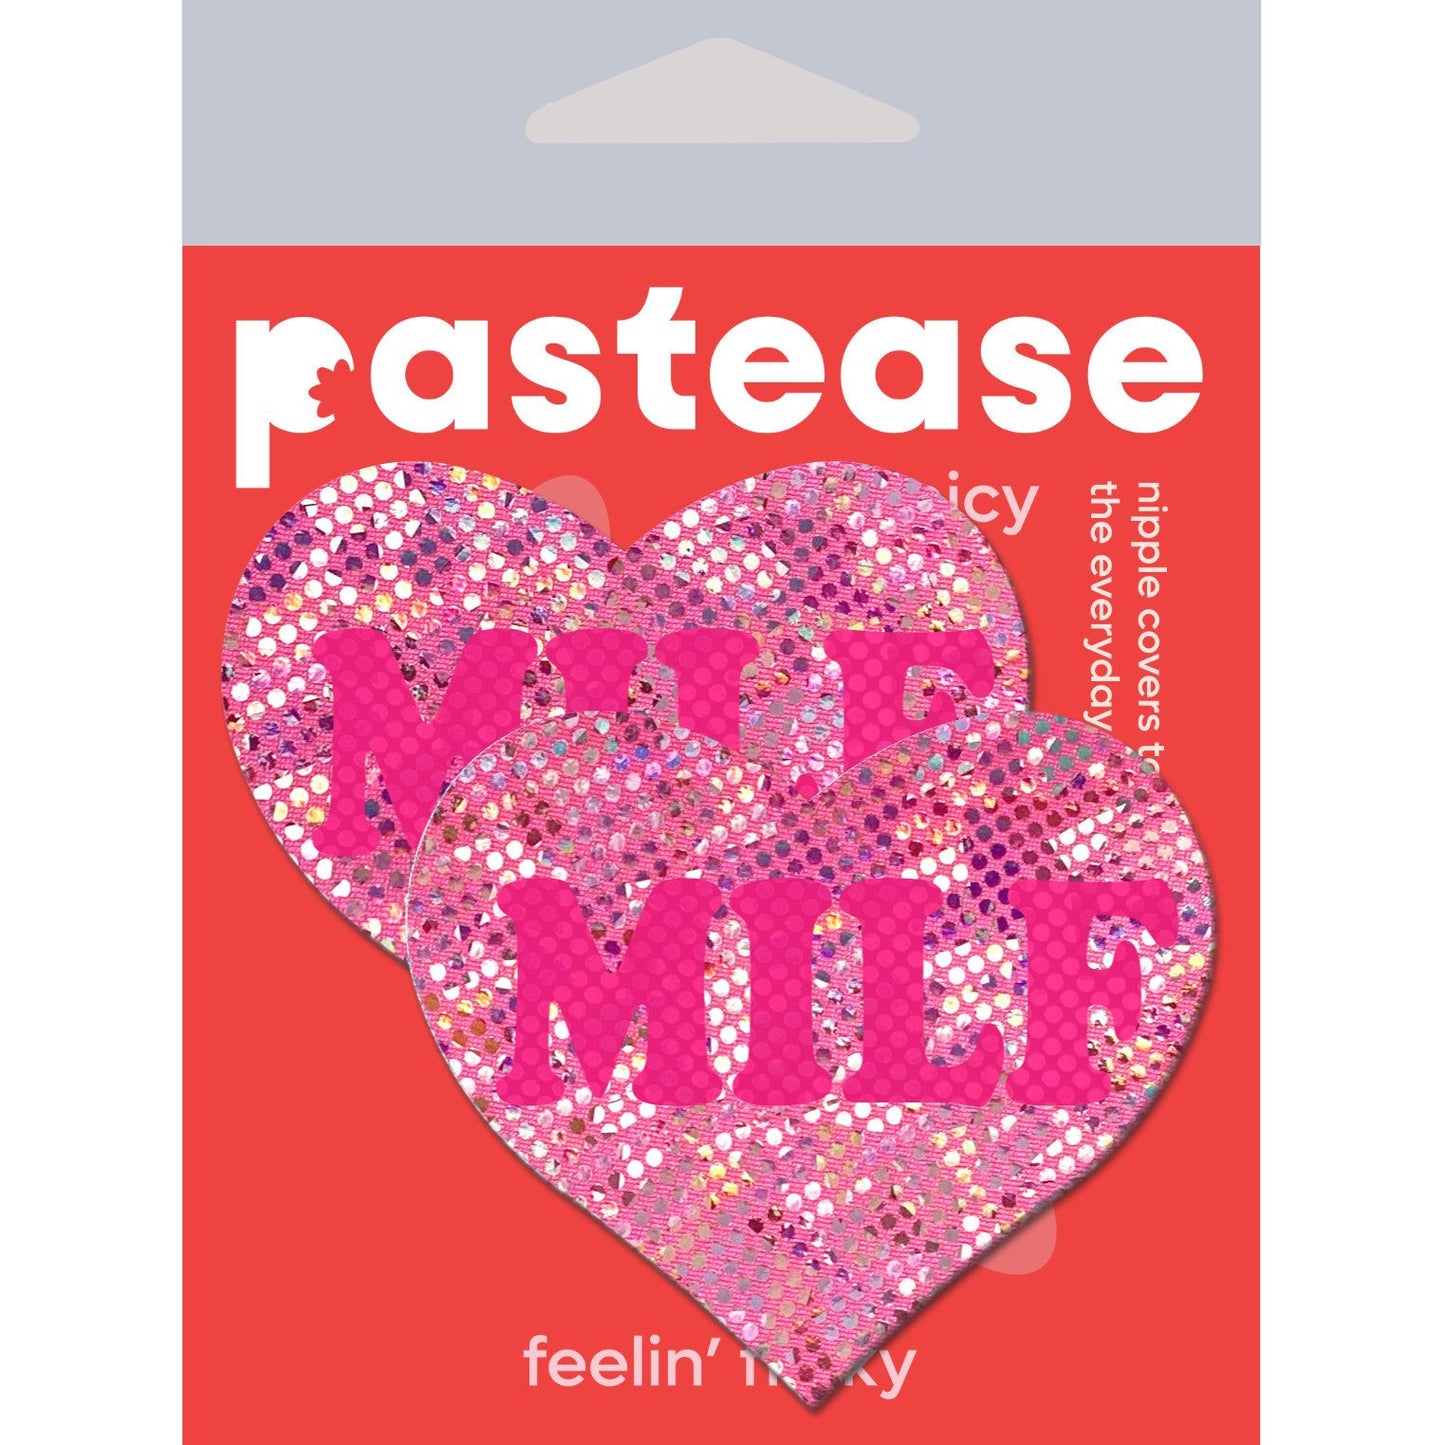 Pastease Love Milf Neon Pink Disco Heart